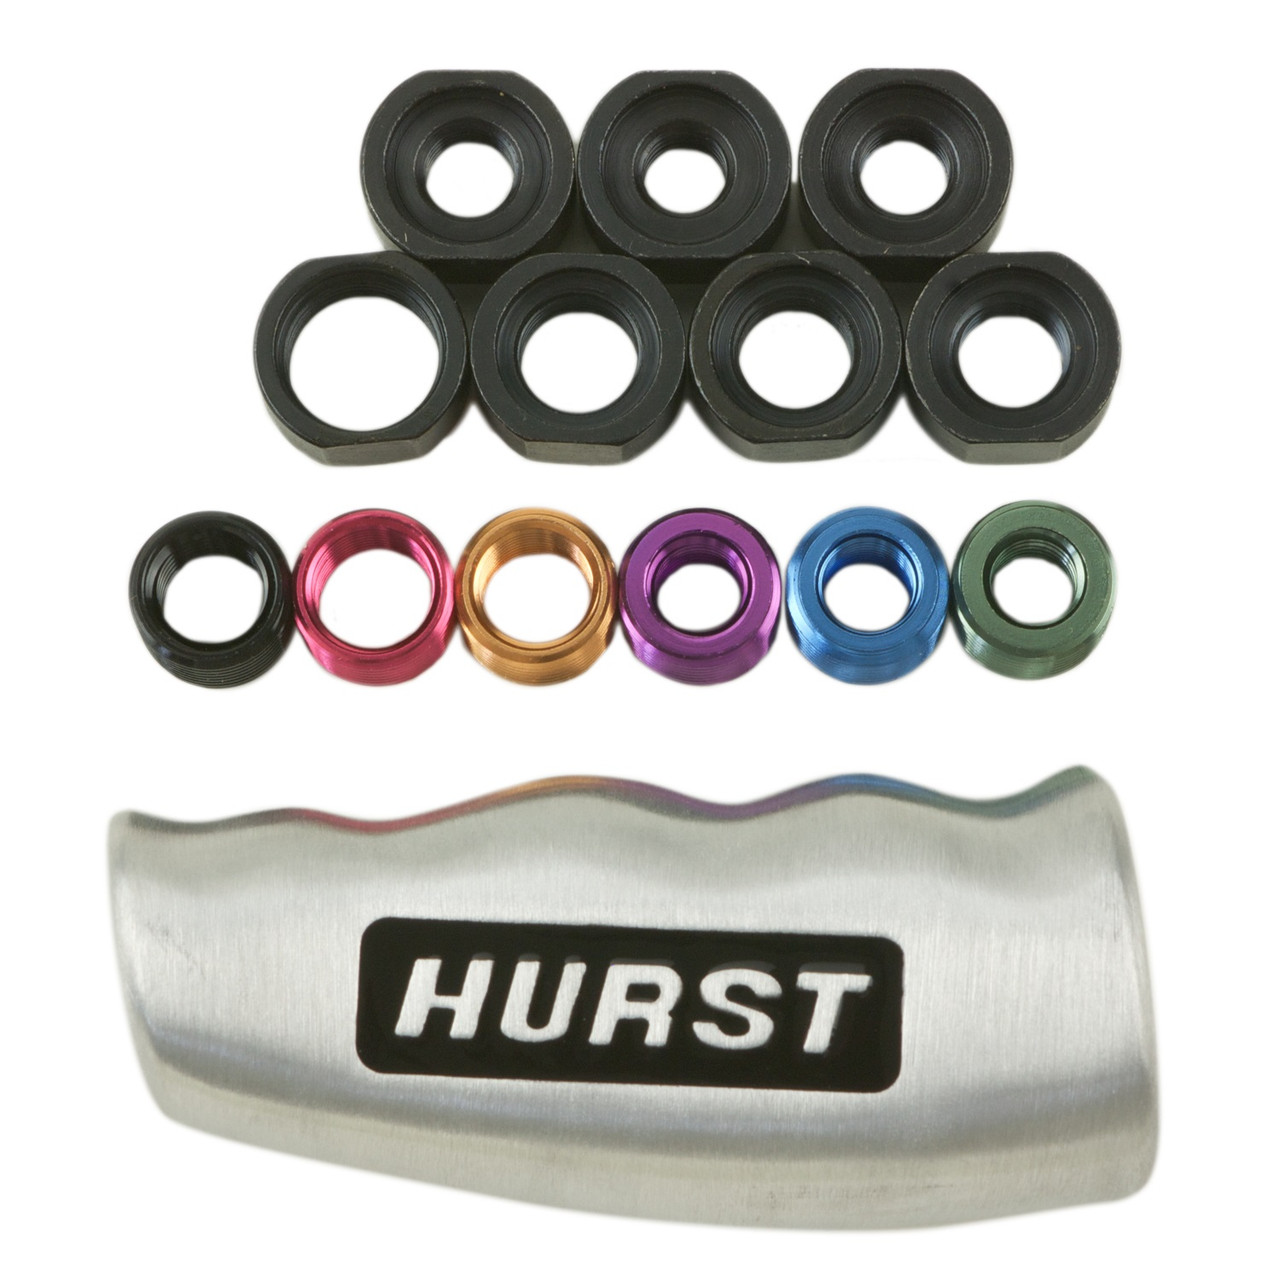 Hurst 1530020 Universal T-Handle Shifter Knob